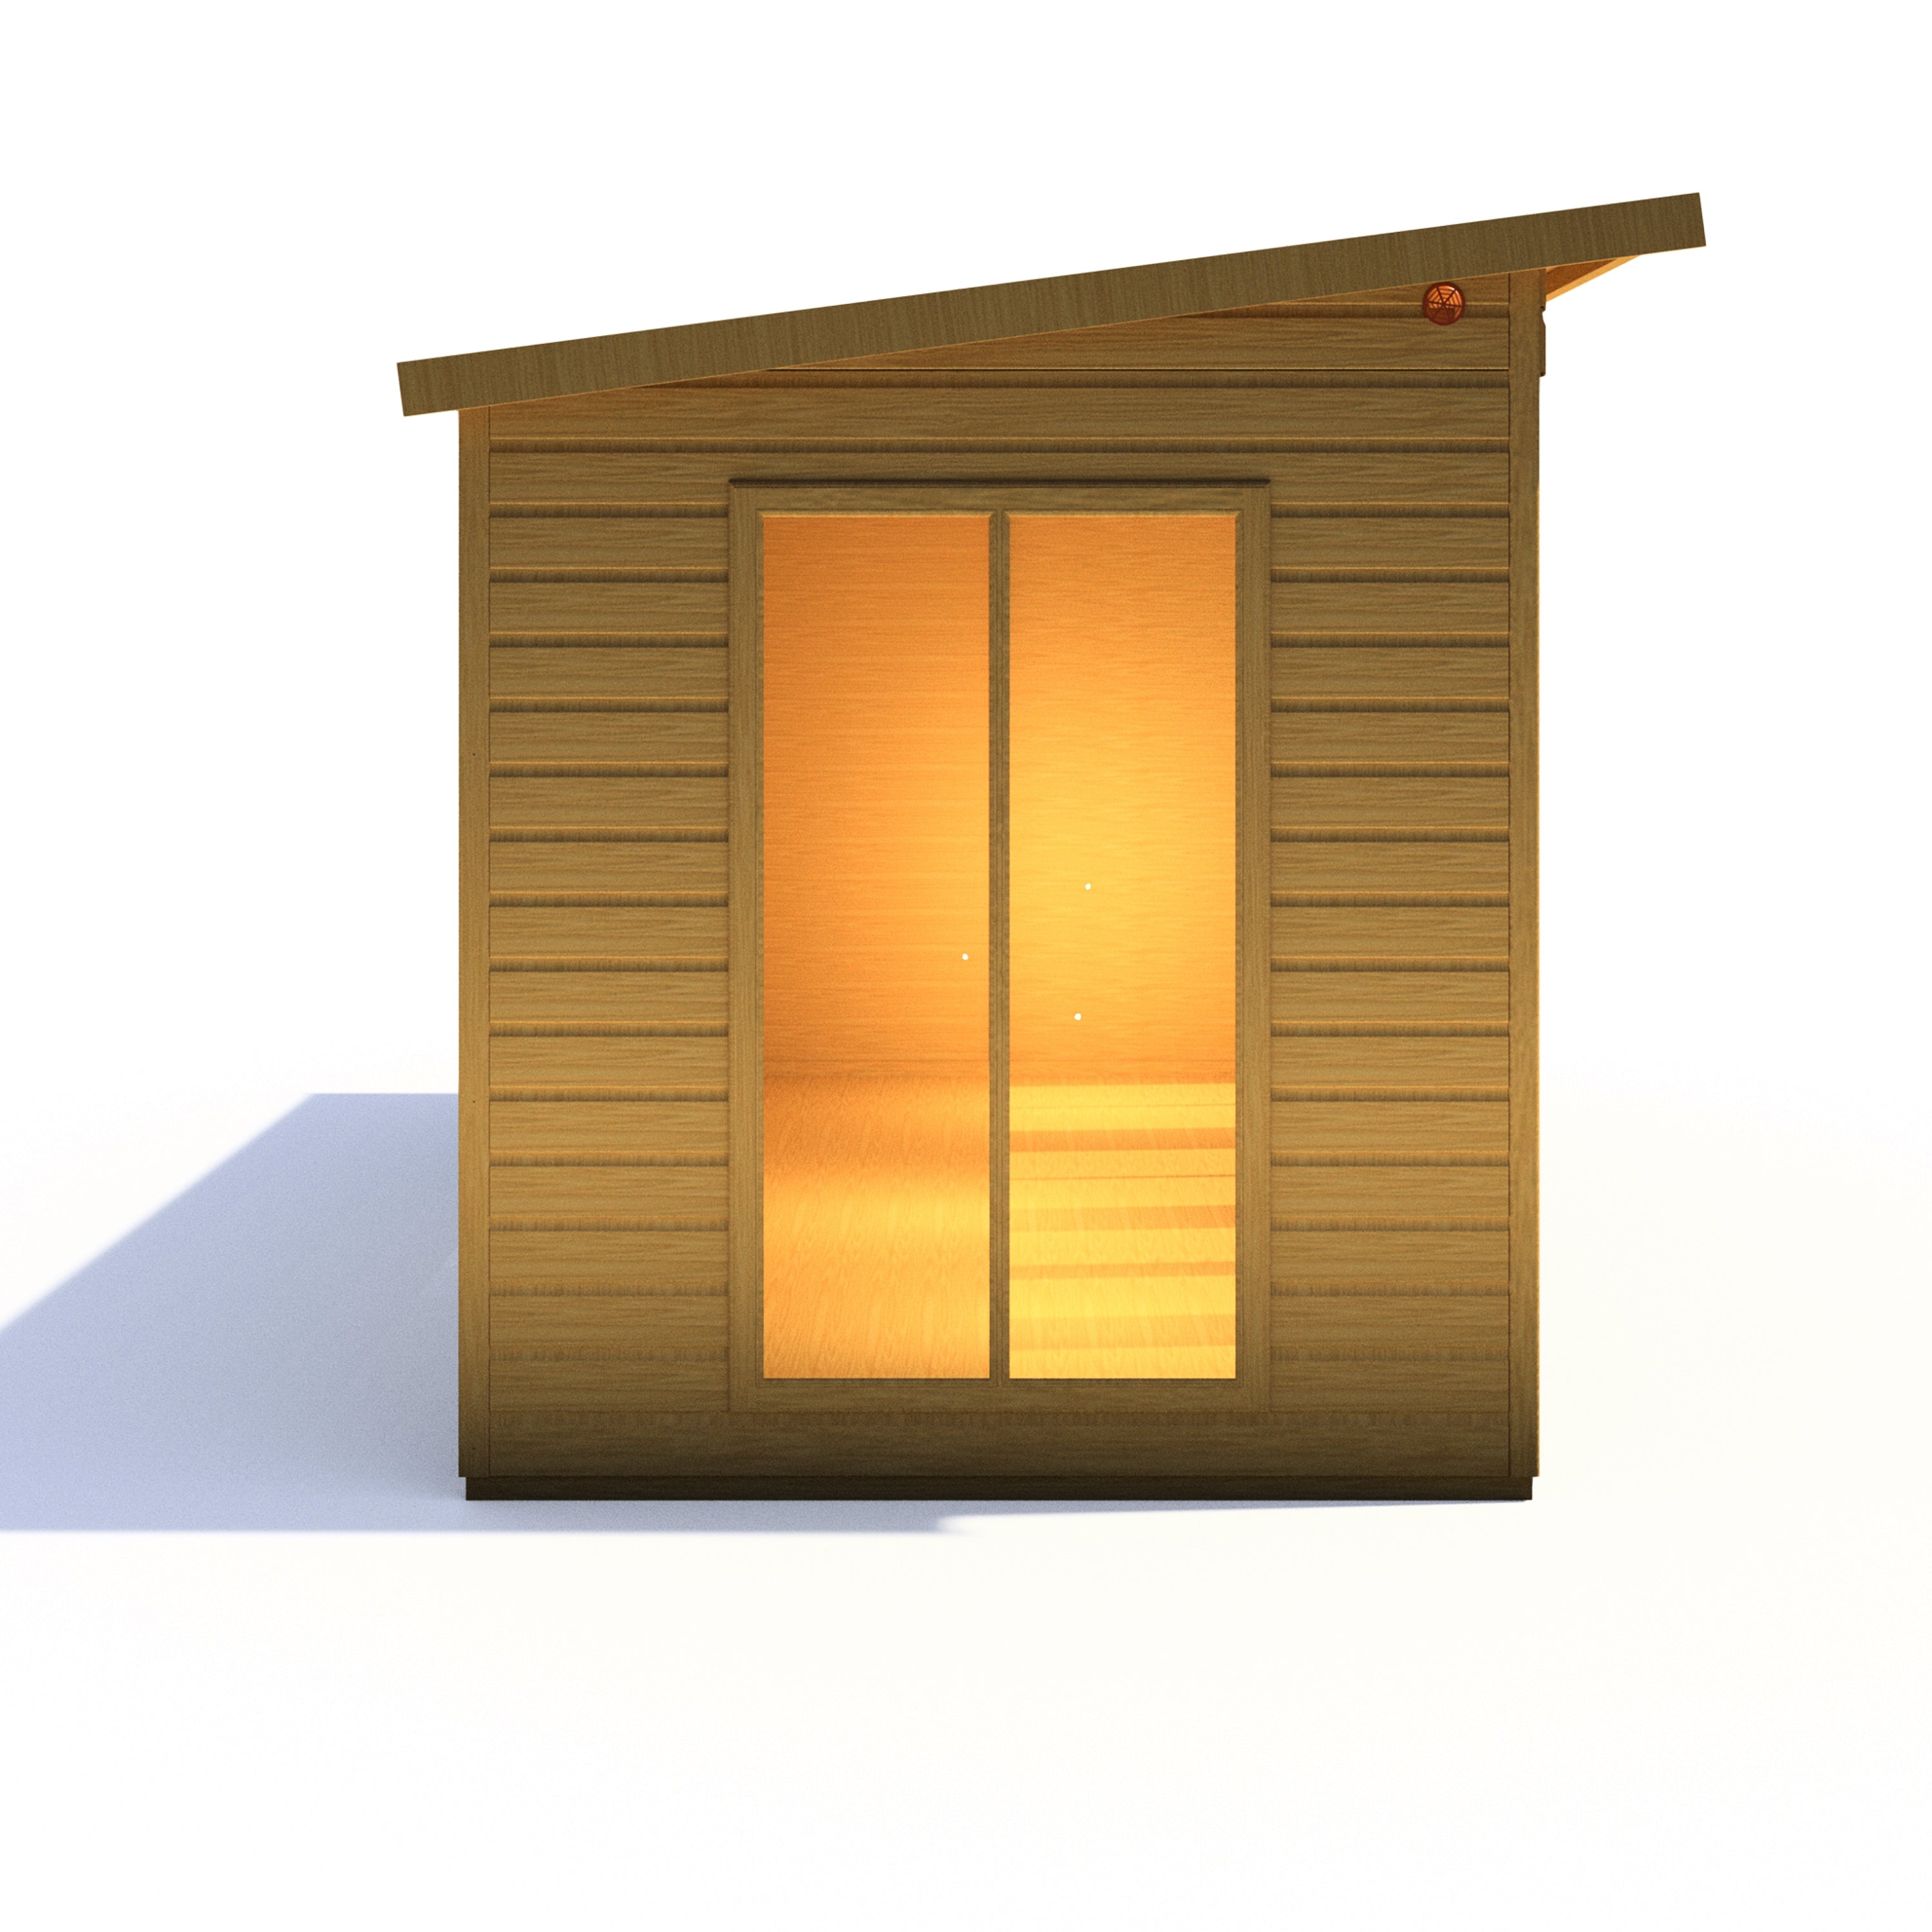 Shire Lela Summerhouse with Storage Shed 16x6